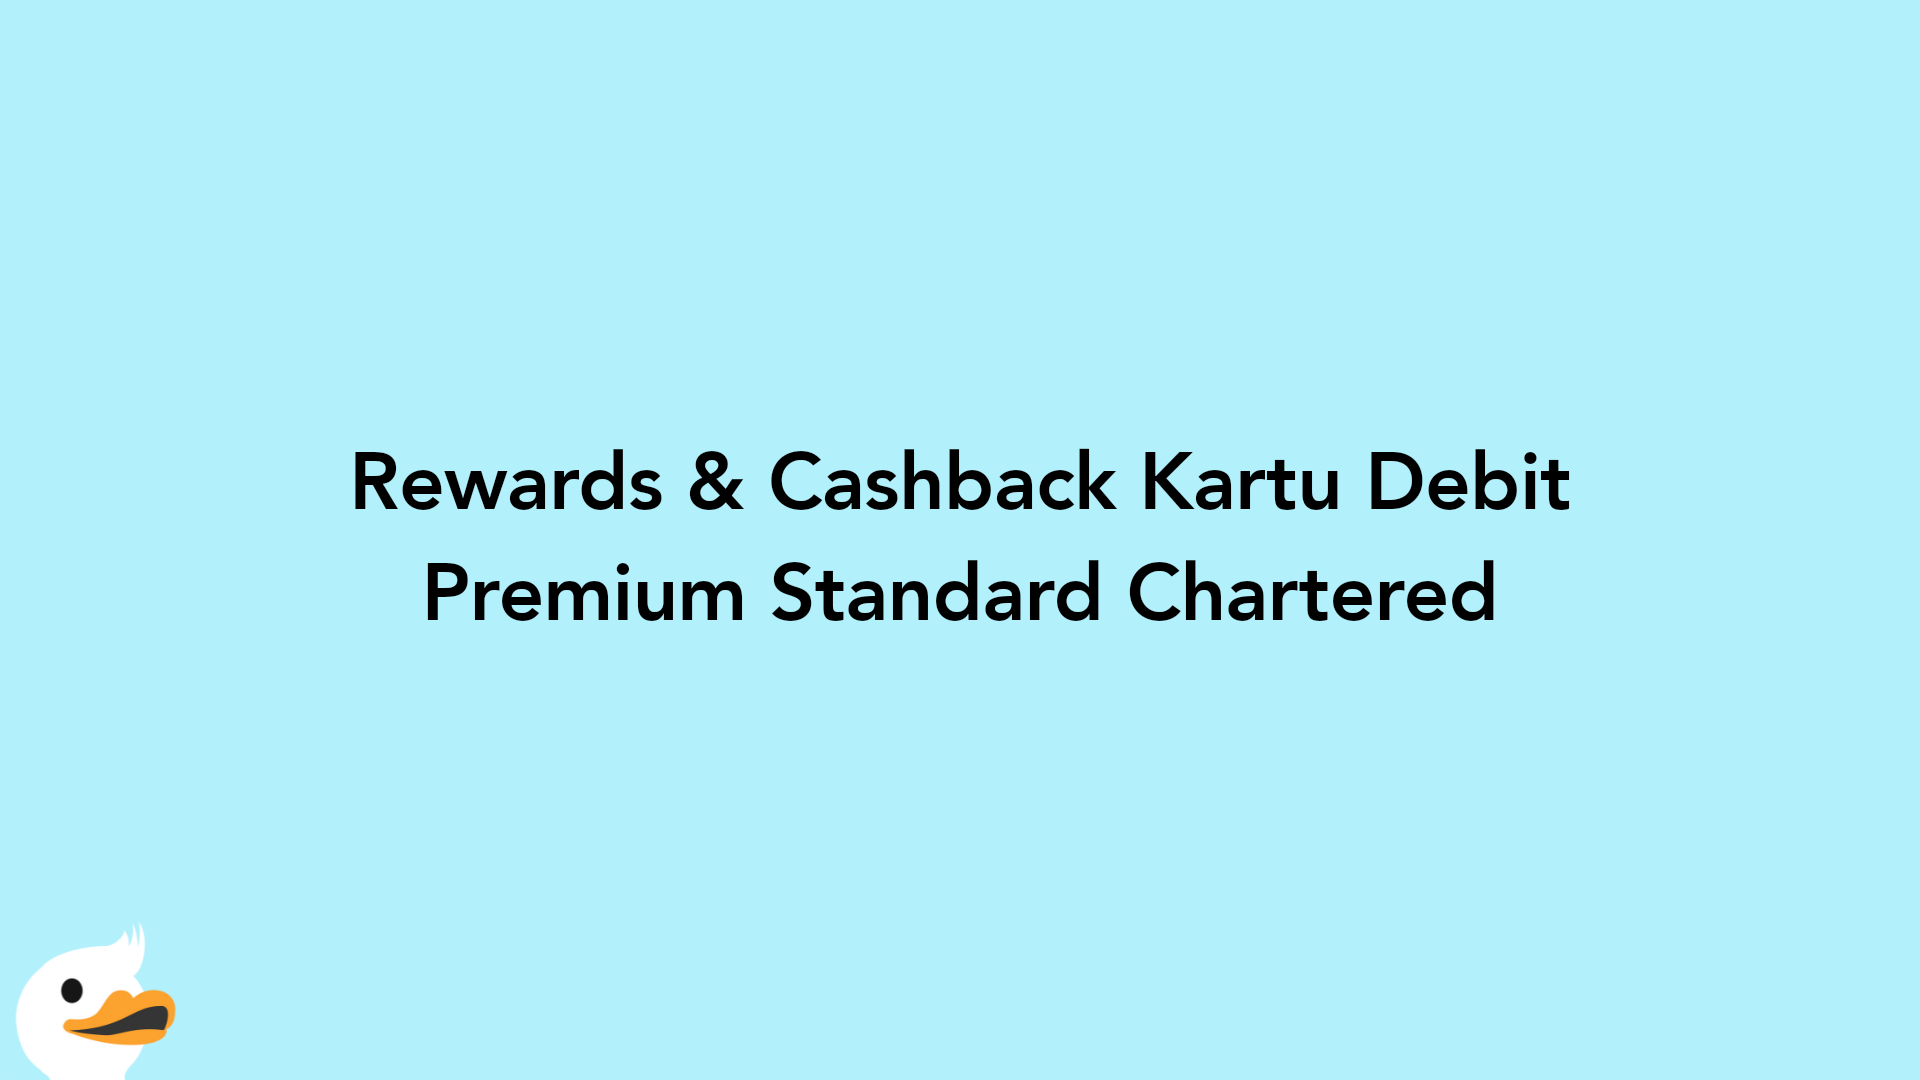 Rewards & Cashback Kartu Debit Premium Standard Chartered